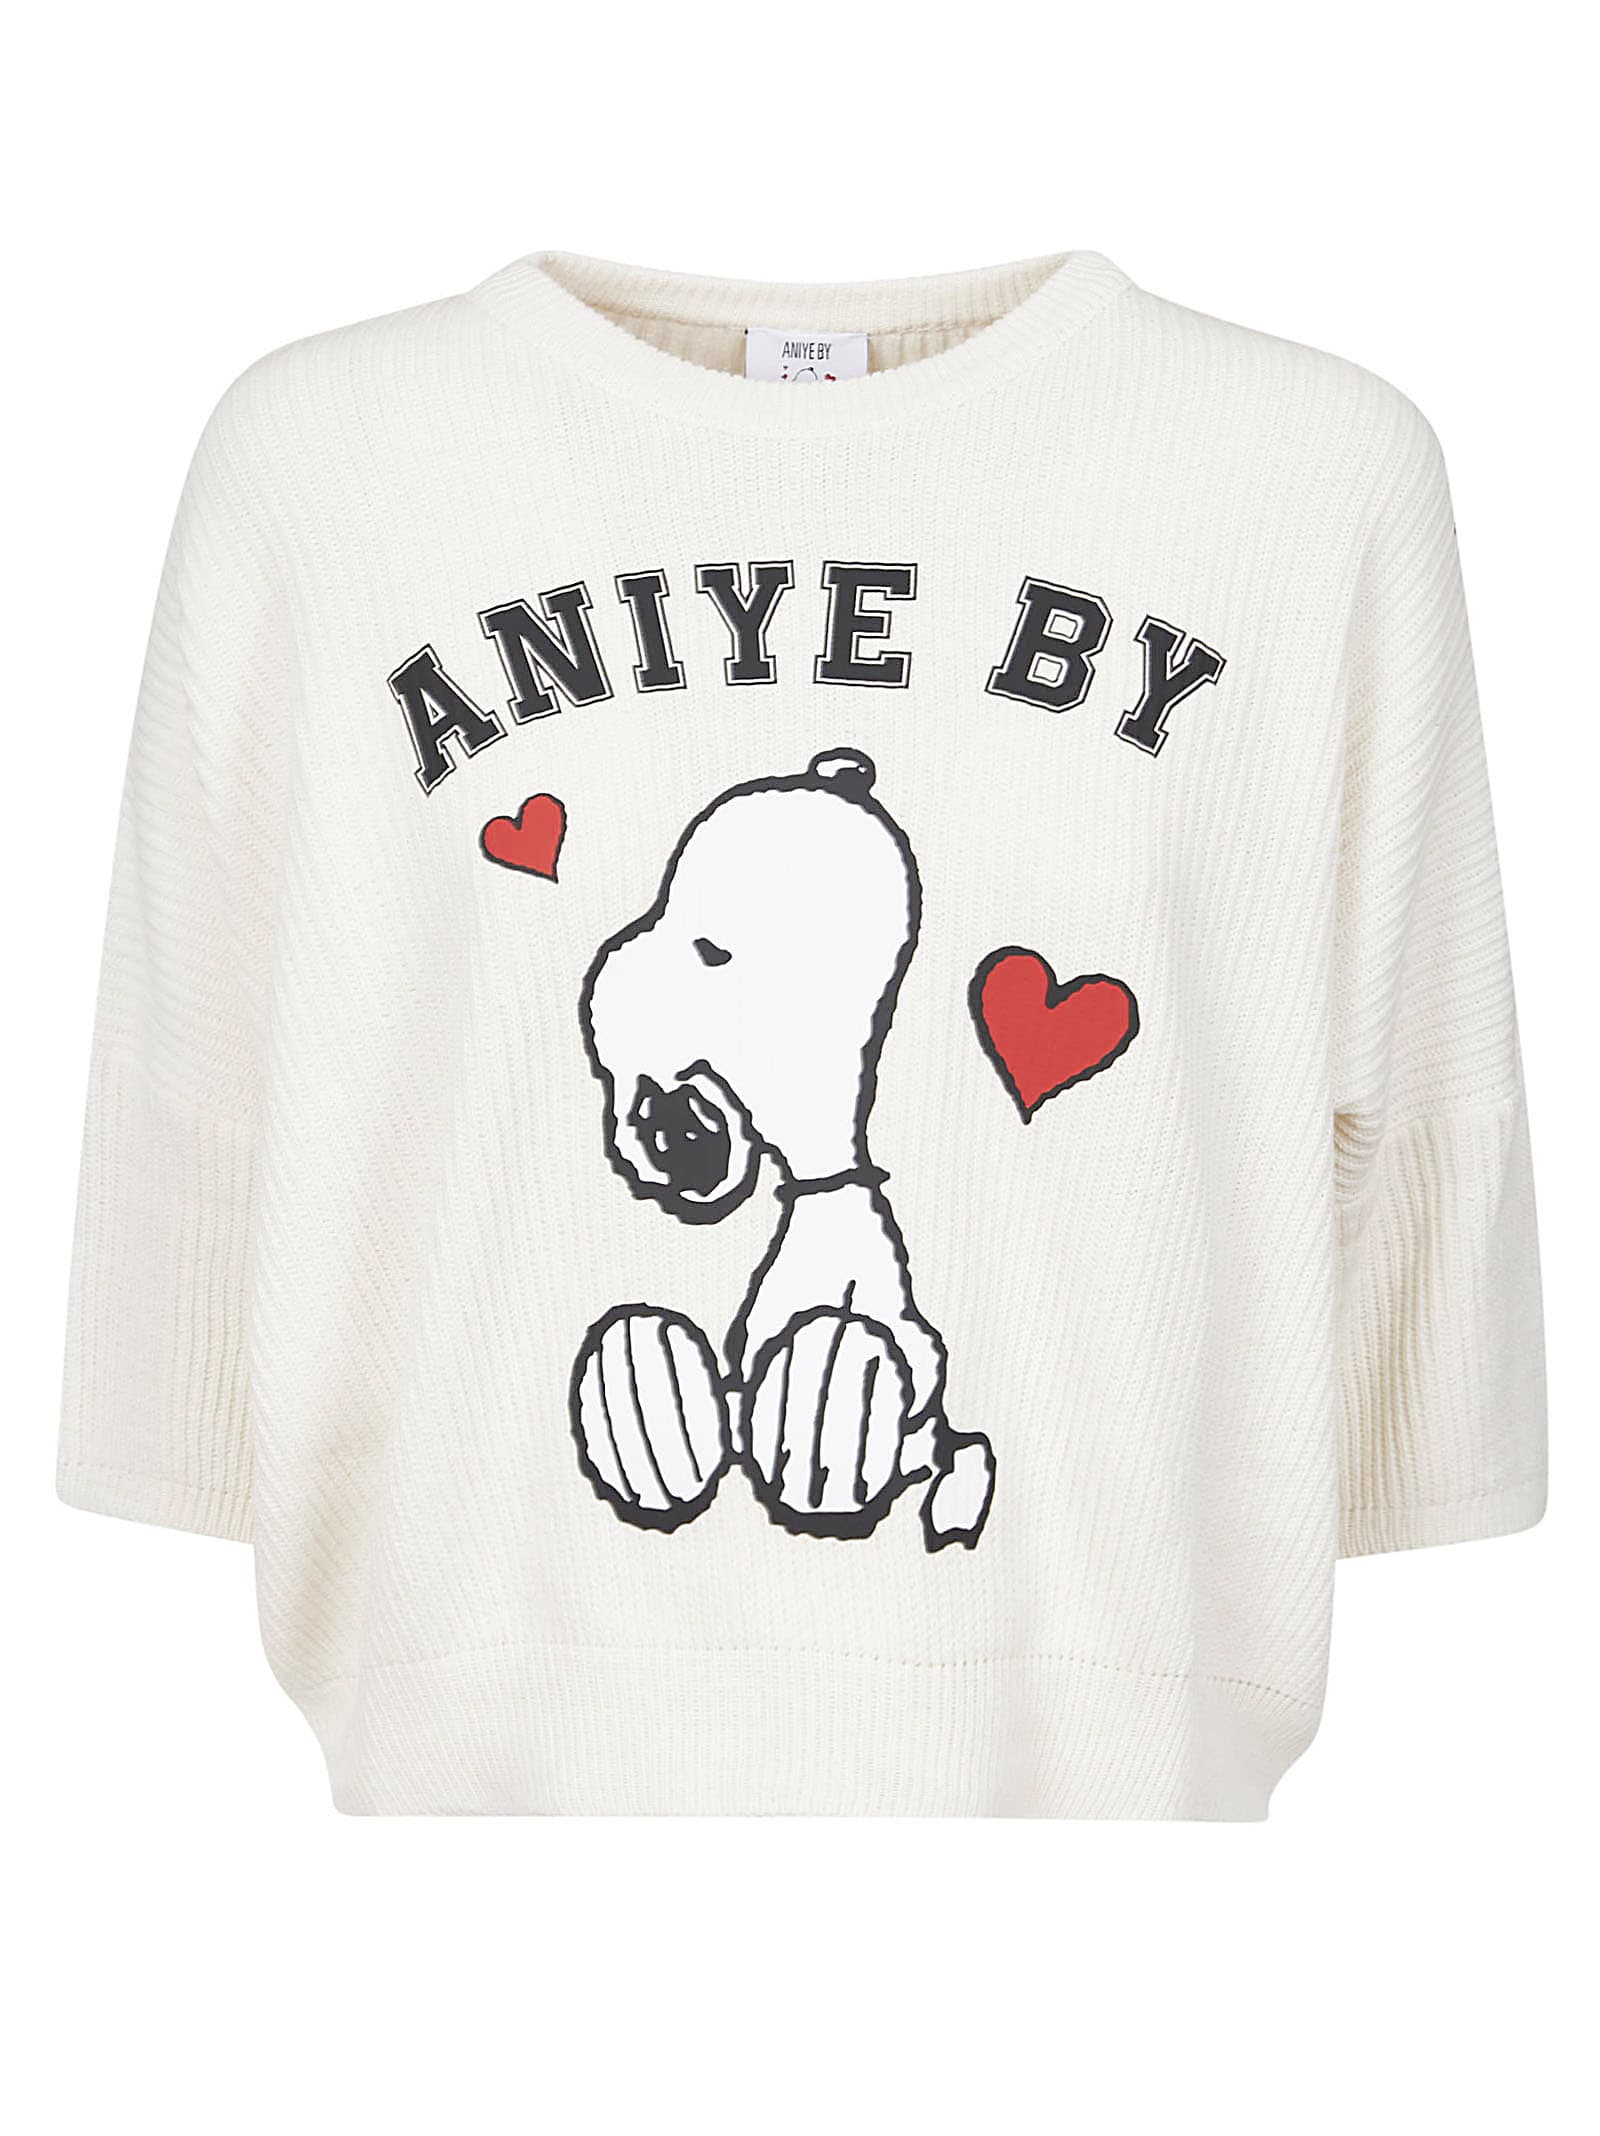 Aniye By Logo Print Top In Bianco